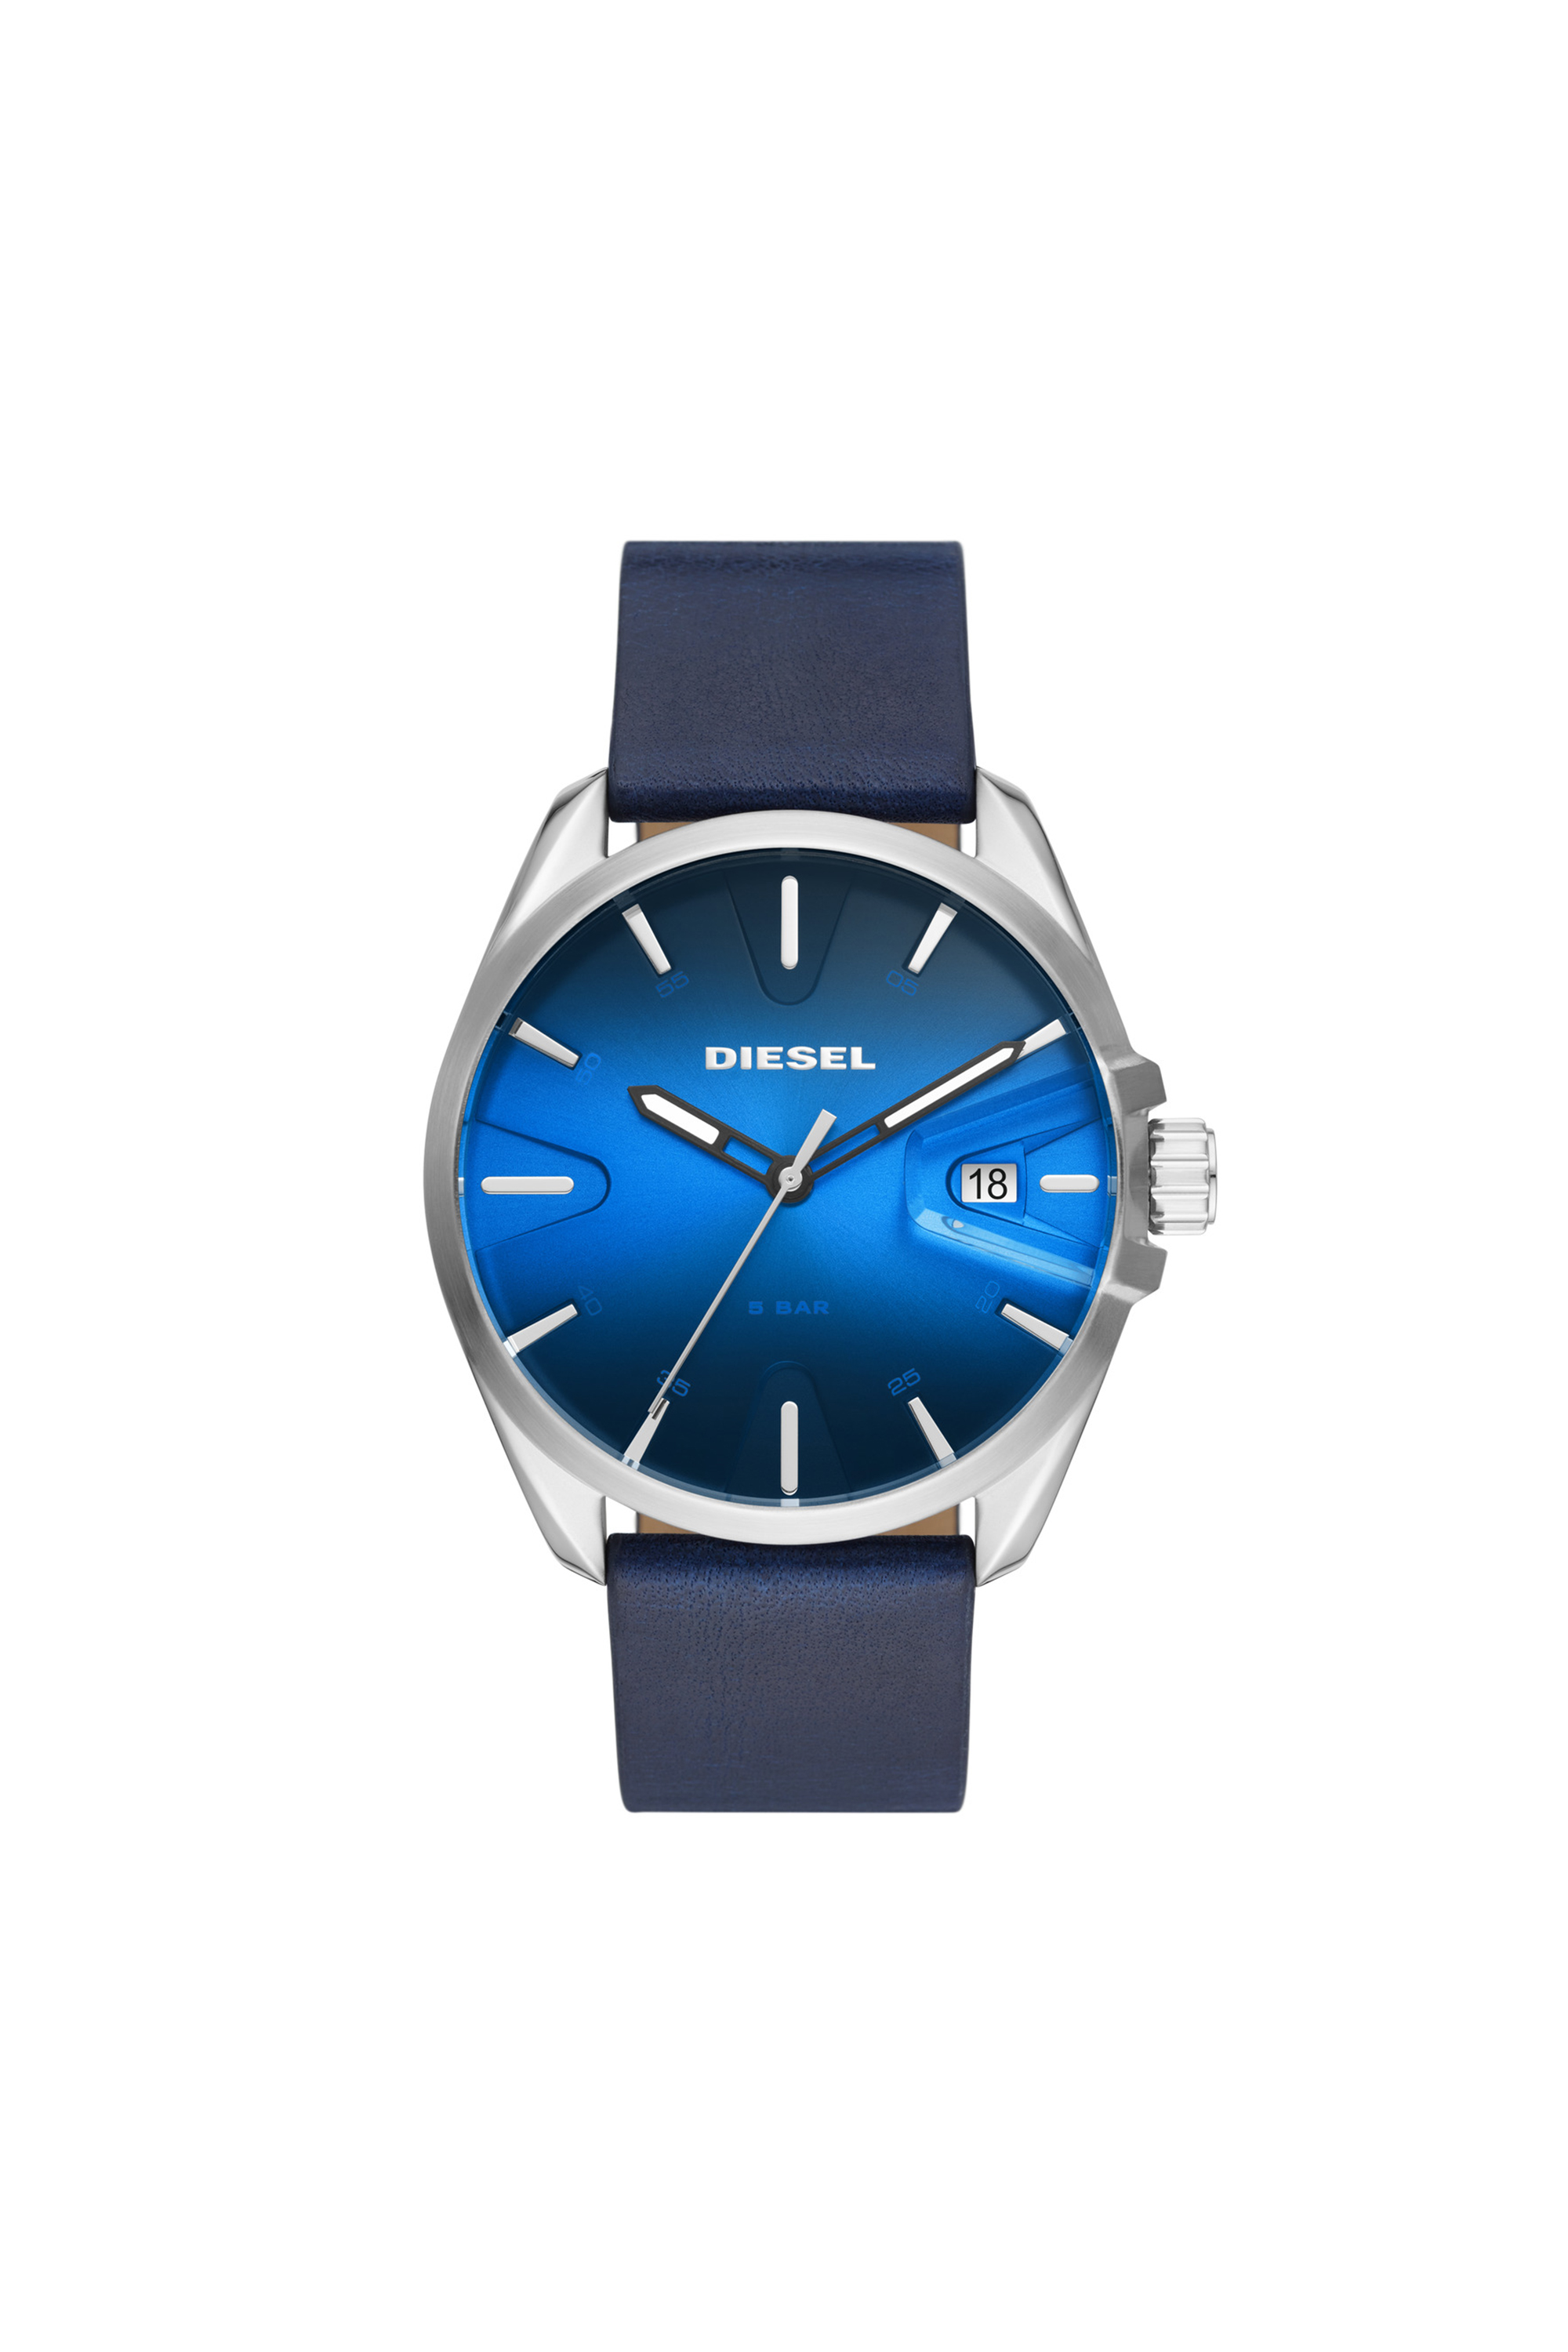 Diesel Ms9 Three-hand Date Blue Leather Watch